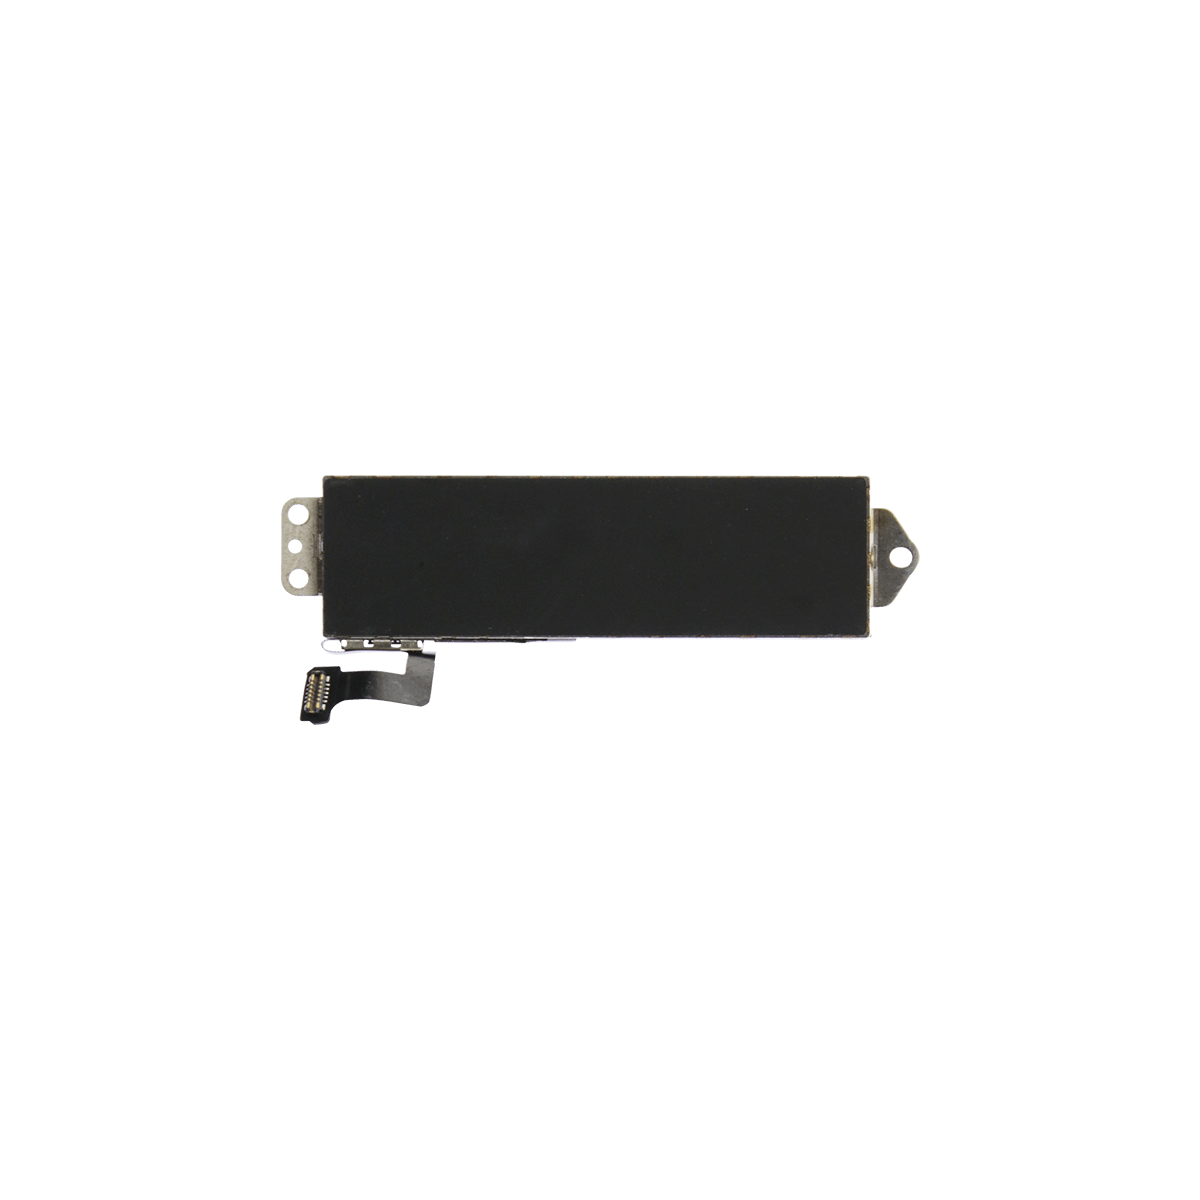 iPhone 7 Plus Vibrator (Taptic Engine) Replacement